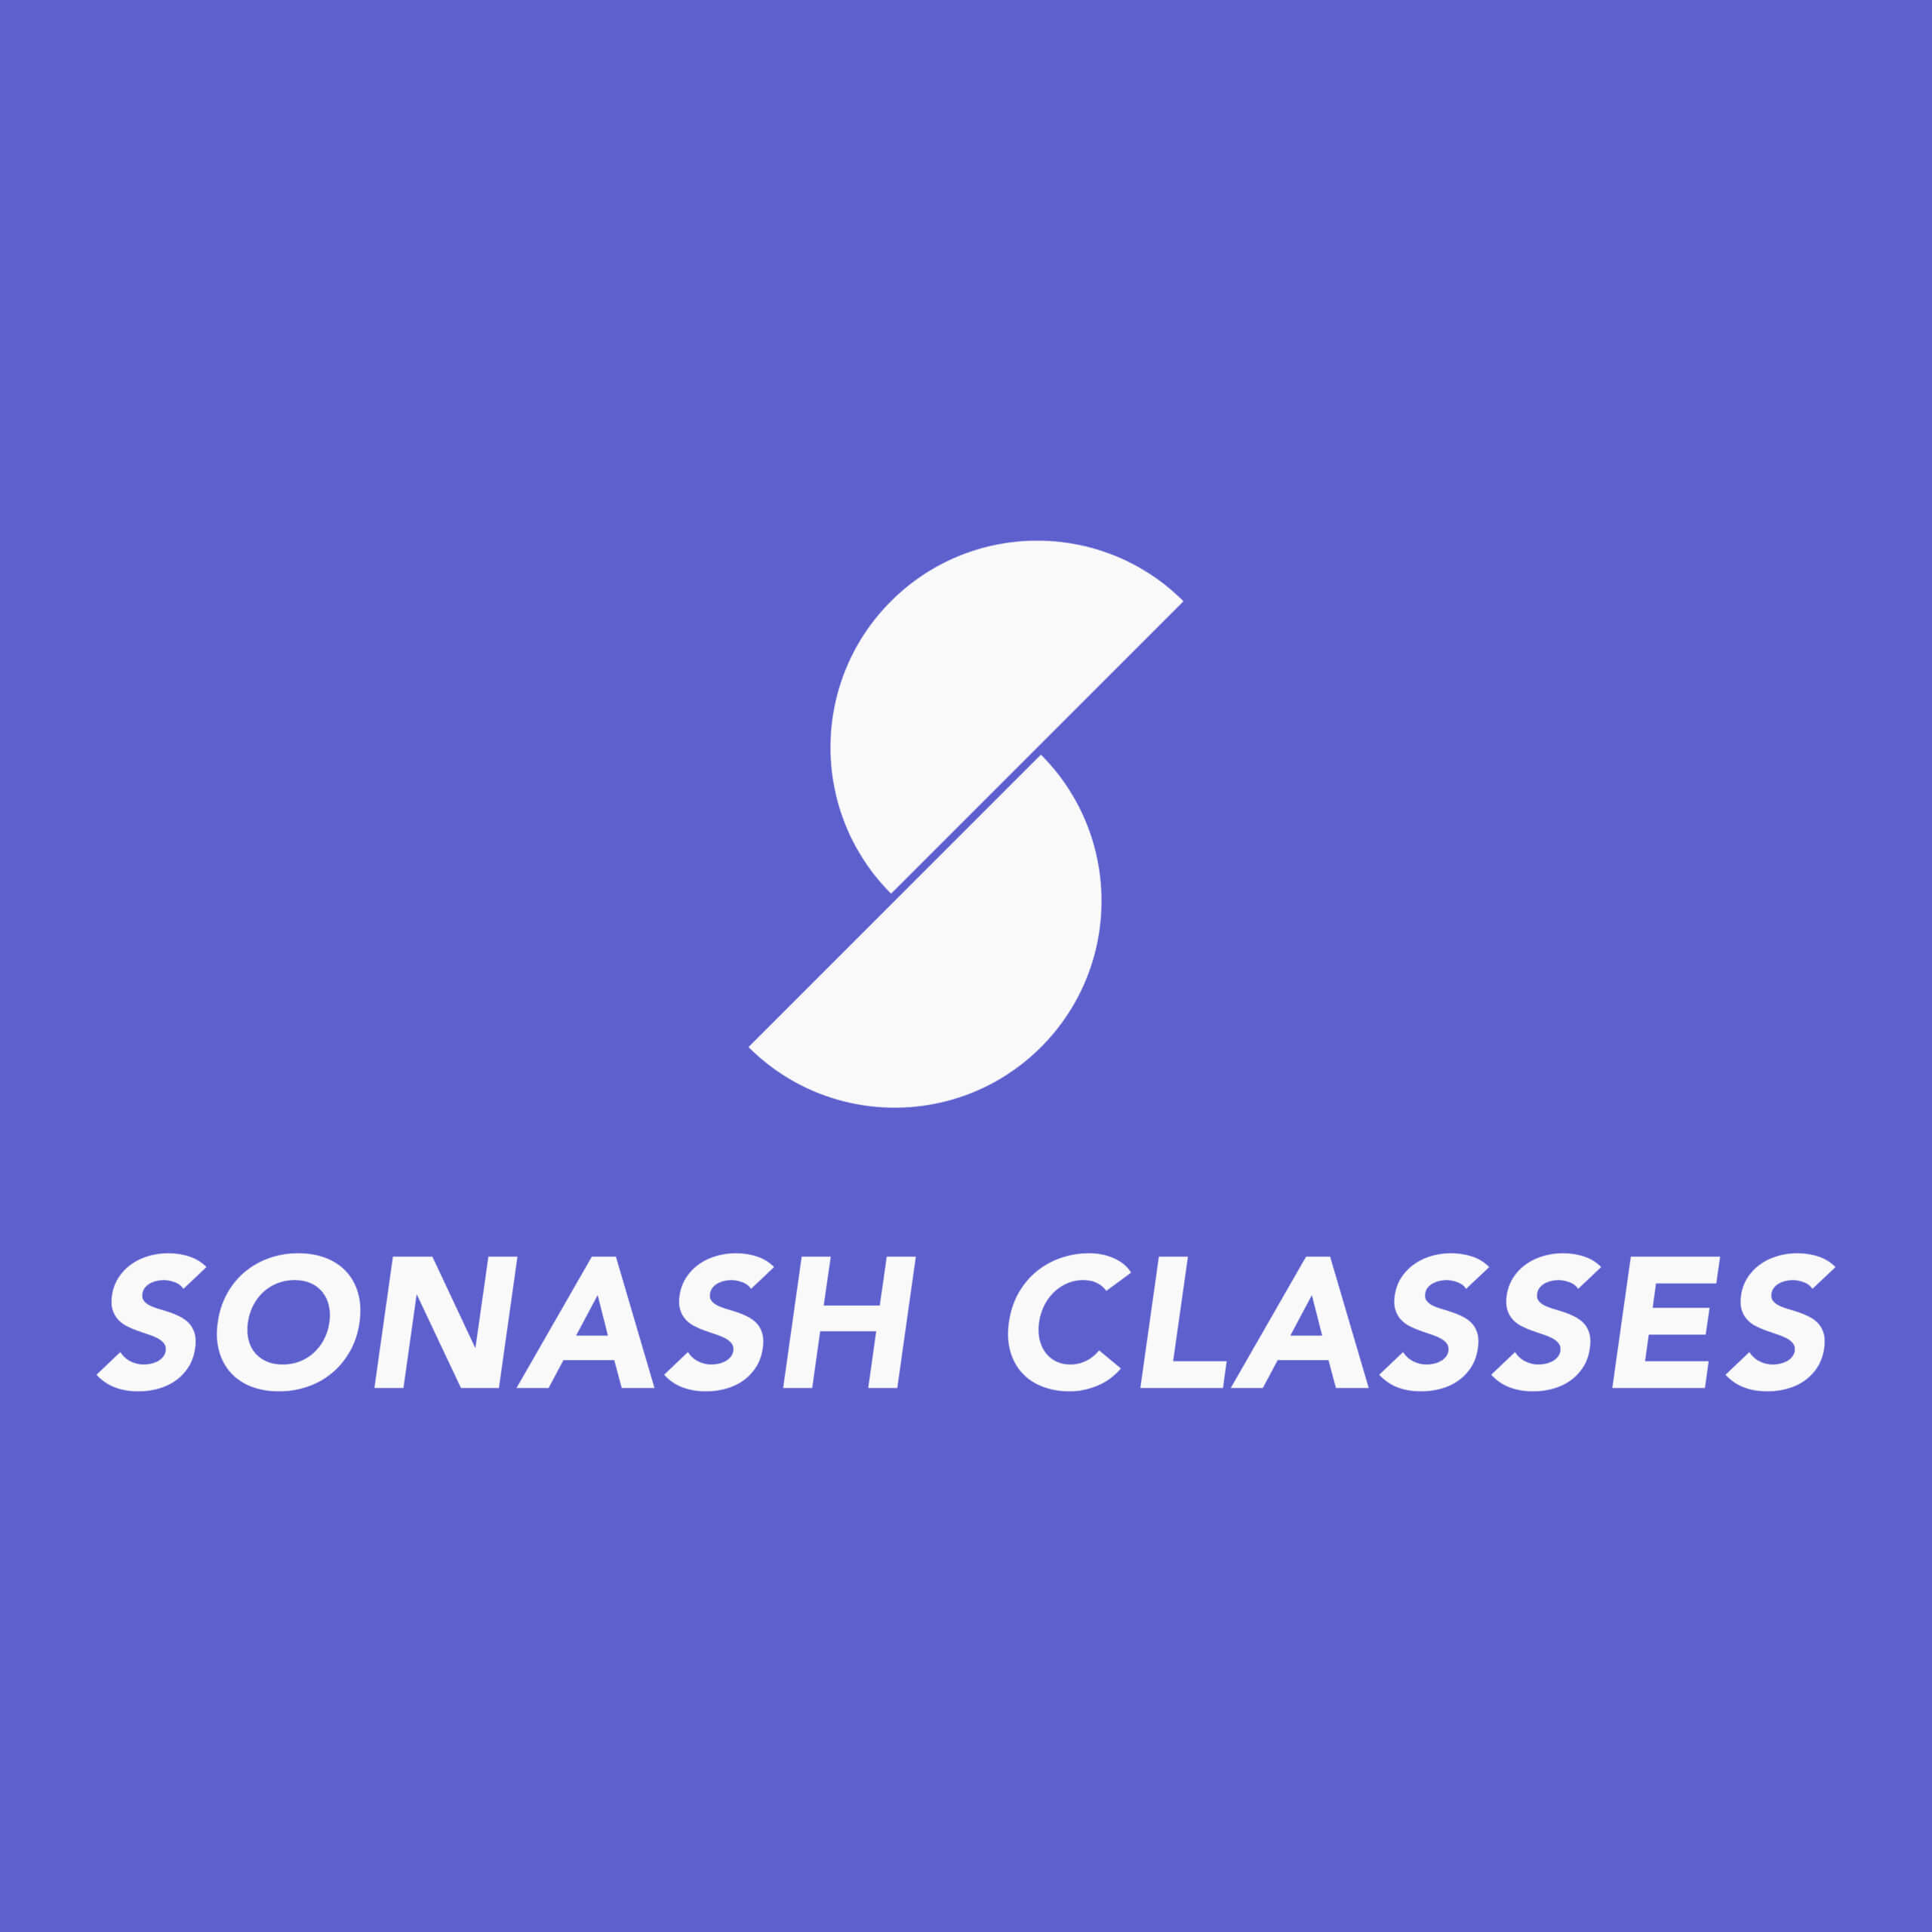 Sonash Classes (2)